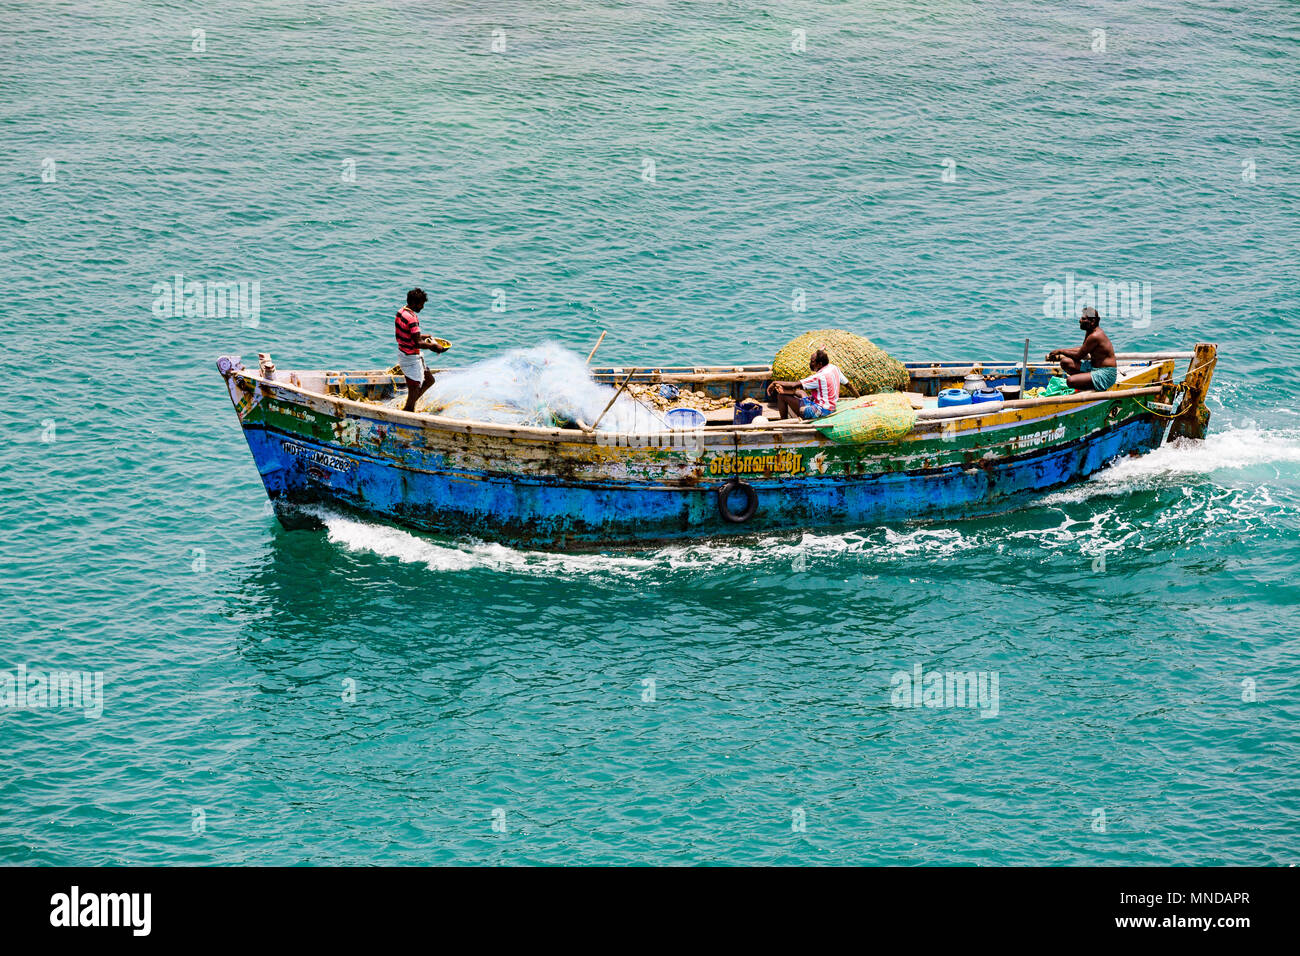 https://c8.alamy.com/comp/MNDAPR/old-wood-small-fishing-boat-floating-on-the-water-bridge-indira-gandhi-india-MNDAPR.jpg